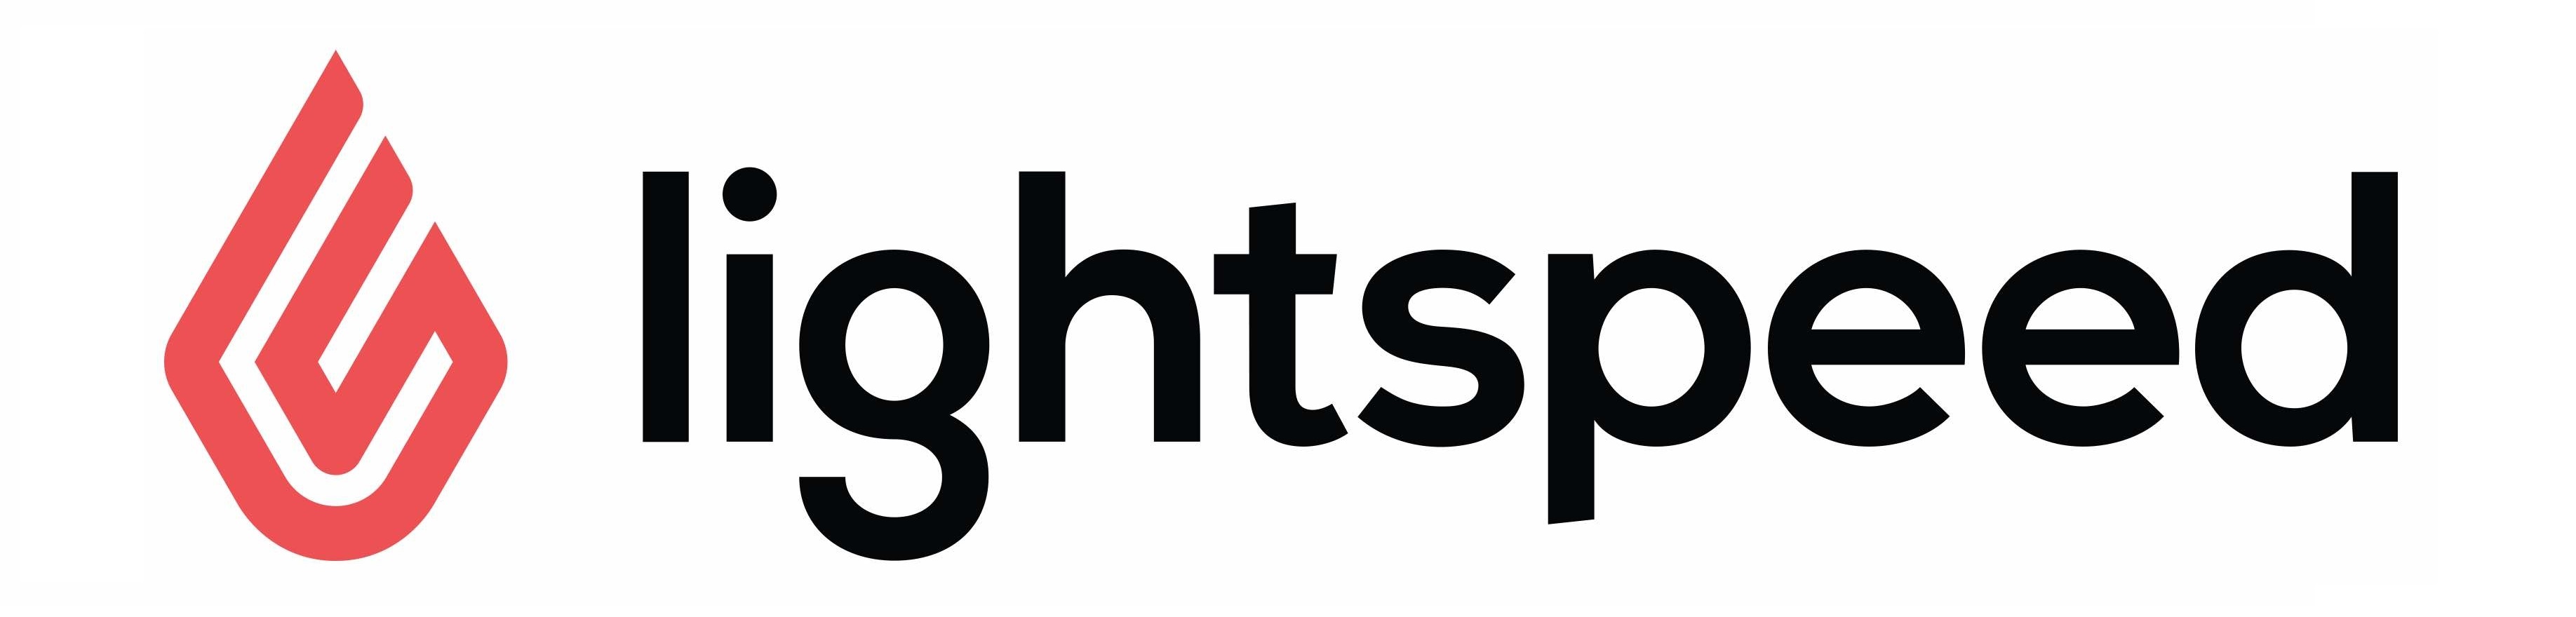 LightSpeed logo